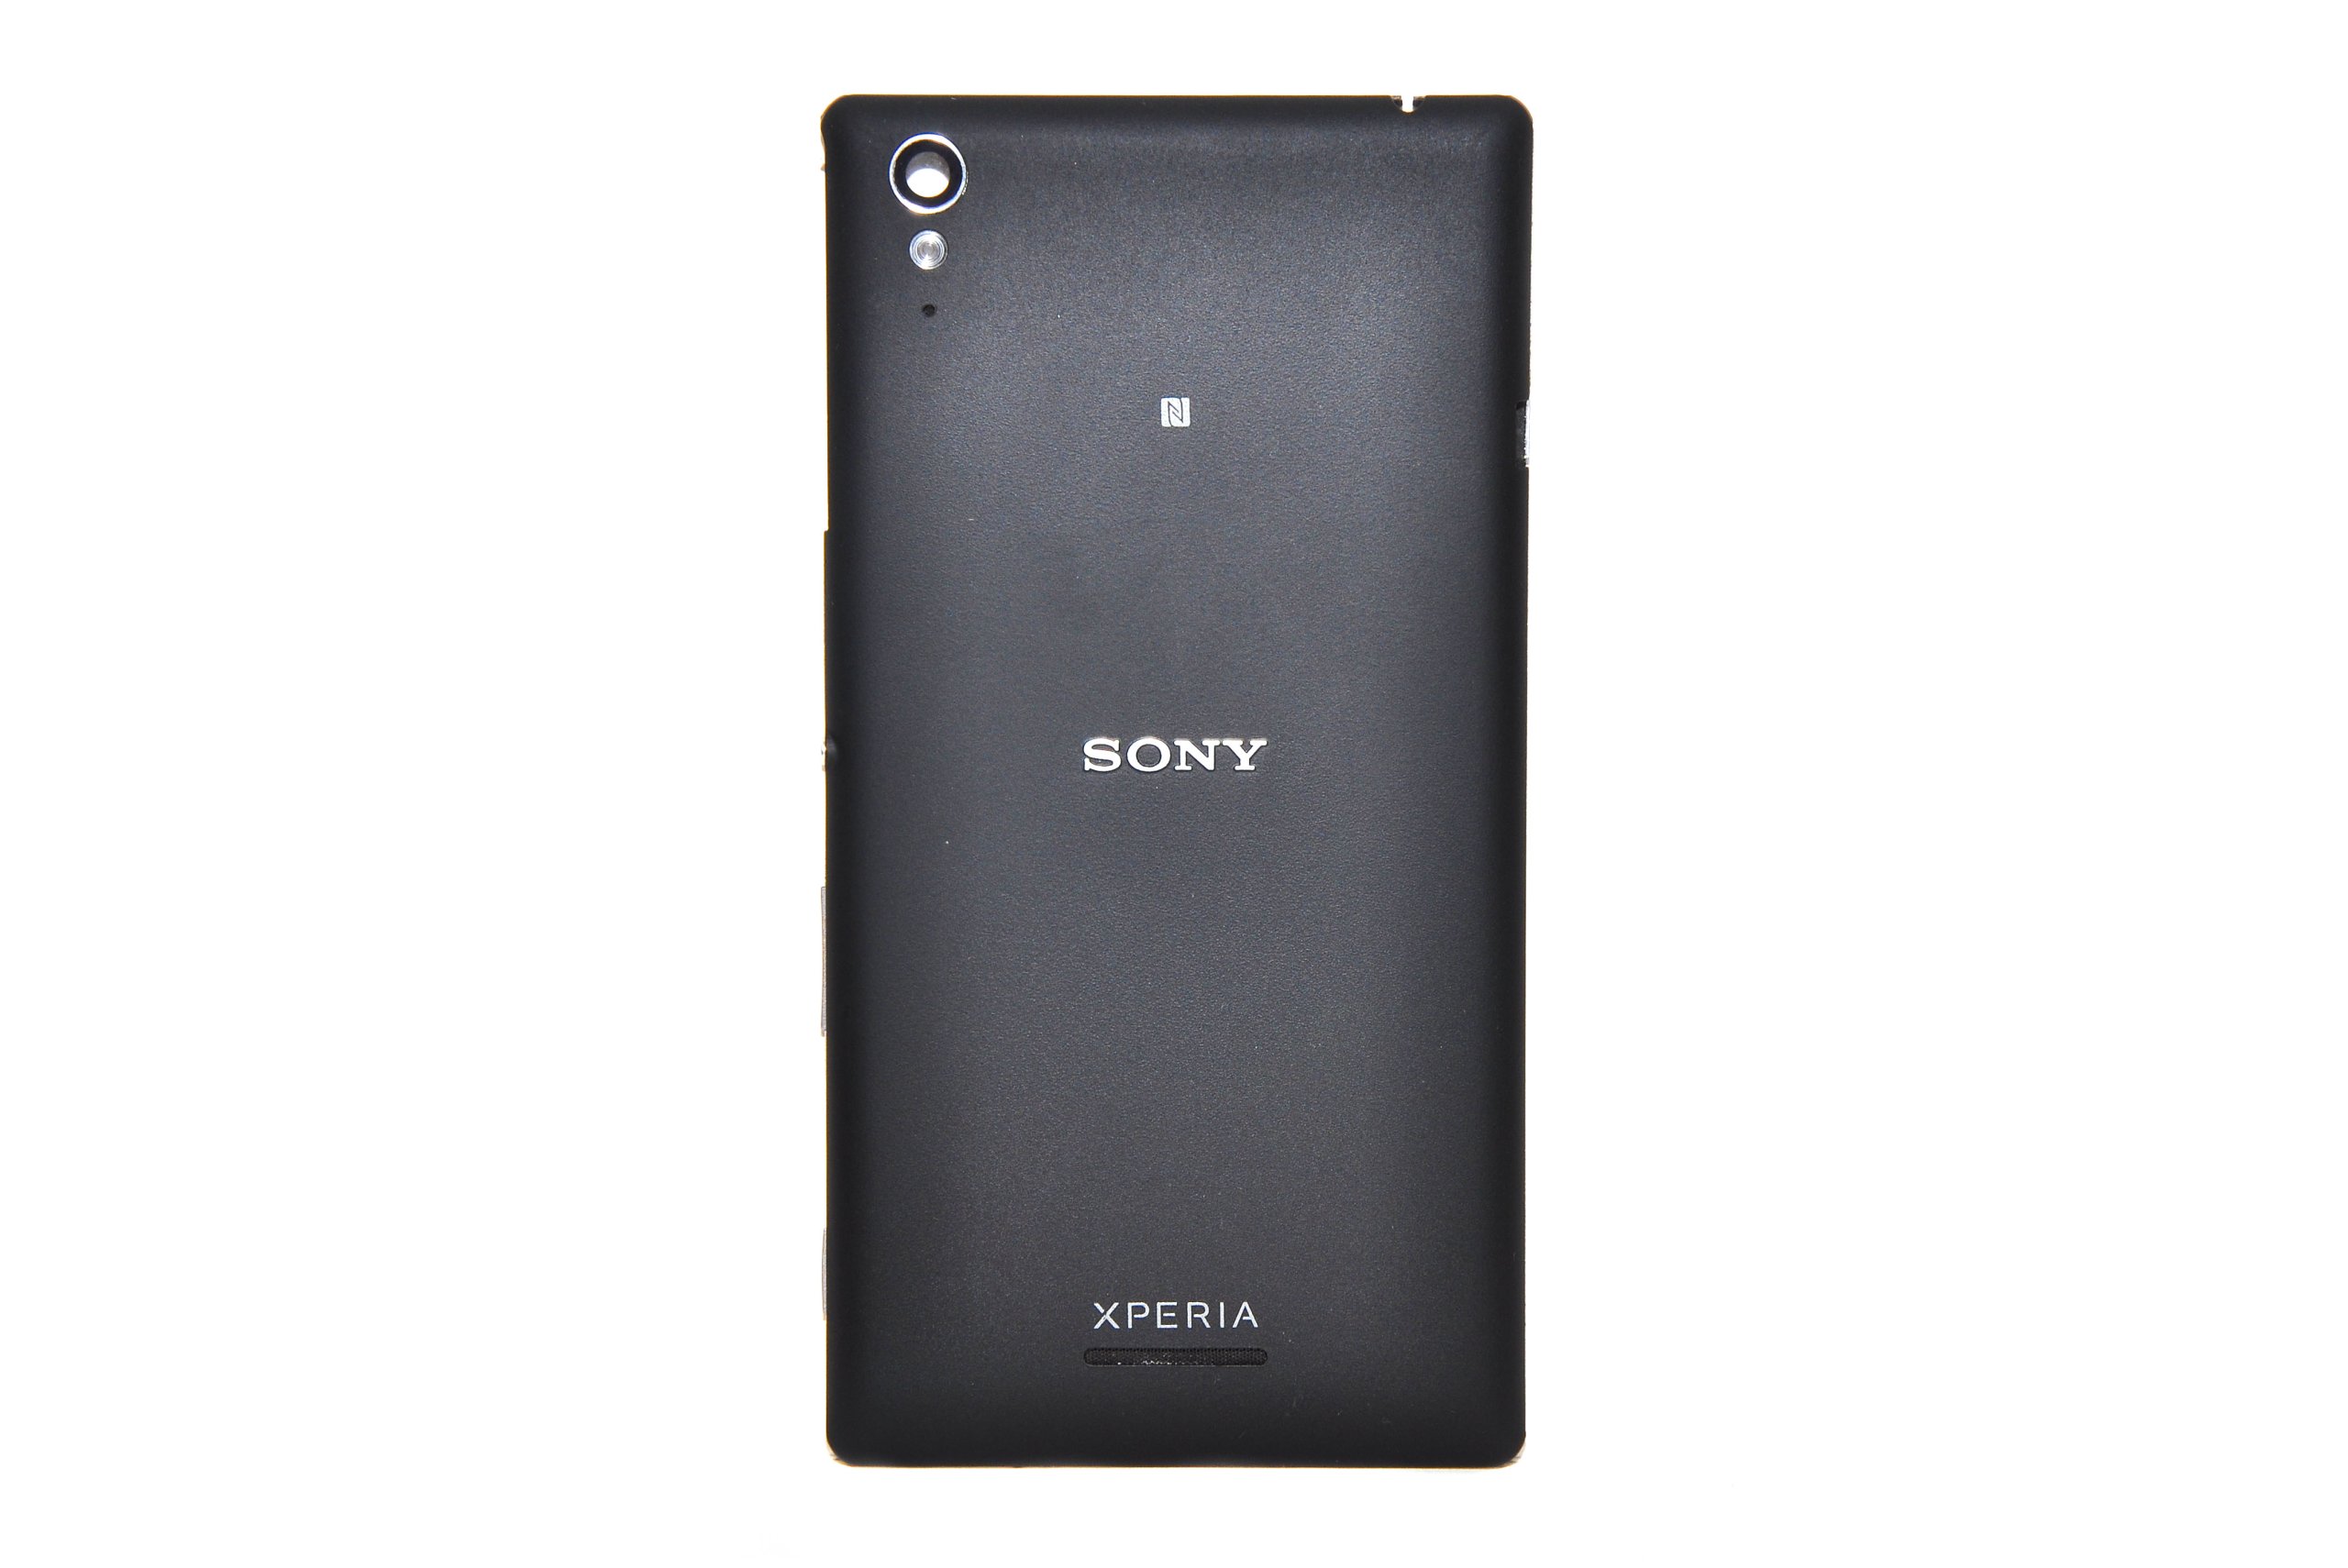 Oryginalna Tylna Klapka Sony Xperia T3 D5102 Nfc 6759480028 Sklep Internetowy Agd Rtv Telefony Laptopy Allegro Pl